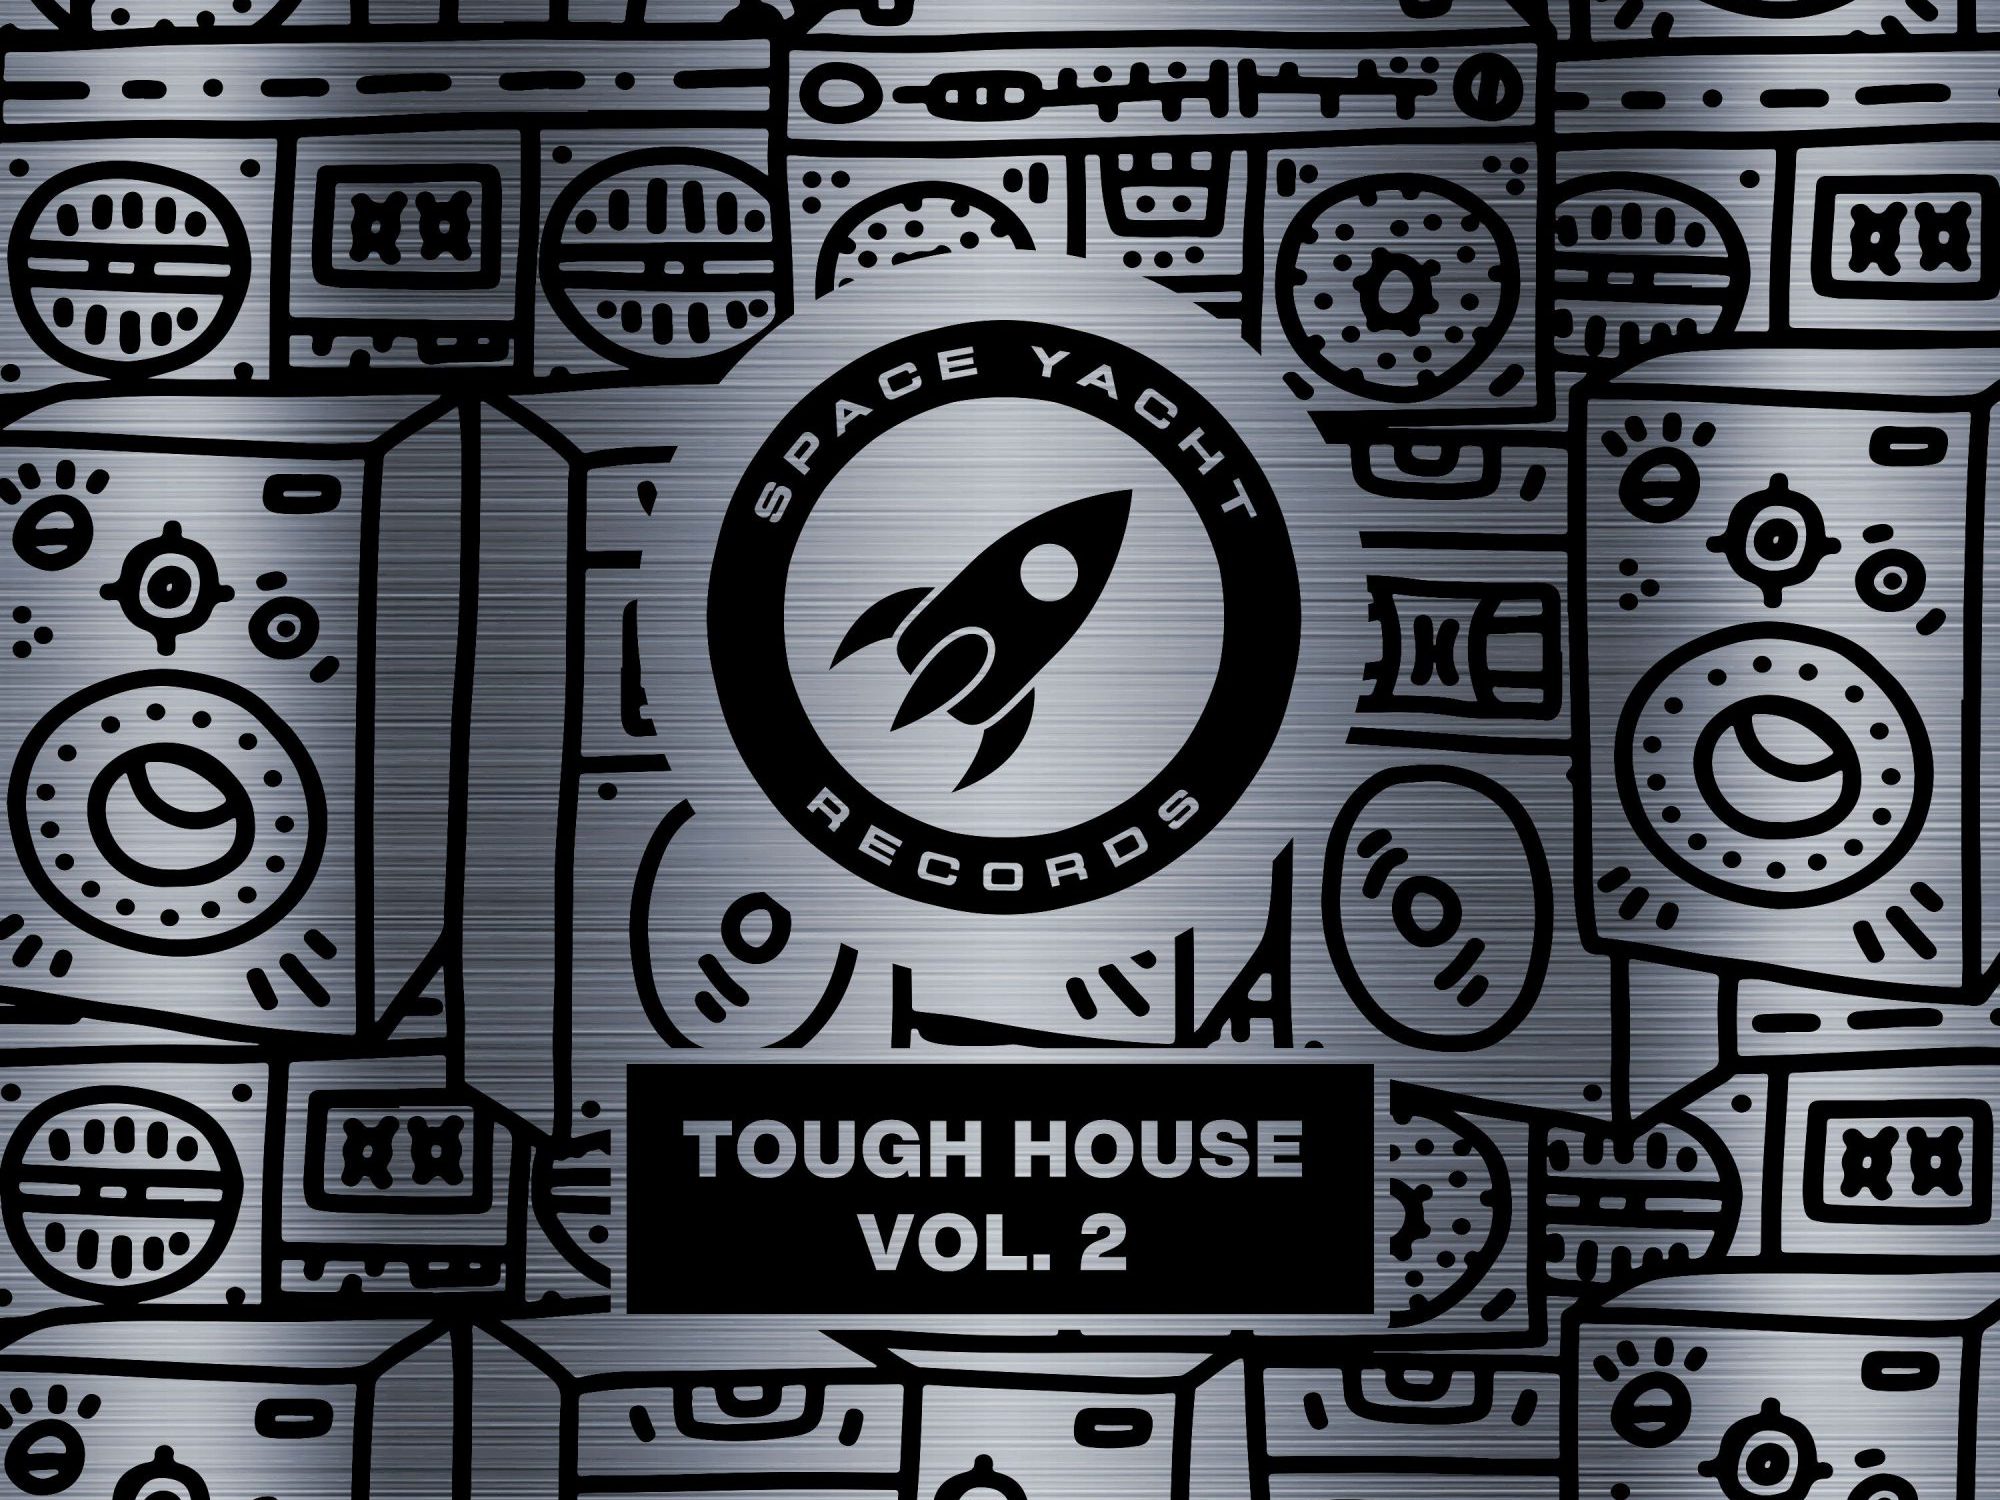 Space Yacht Tough House Vol. 2